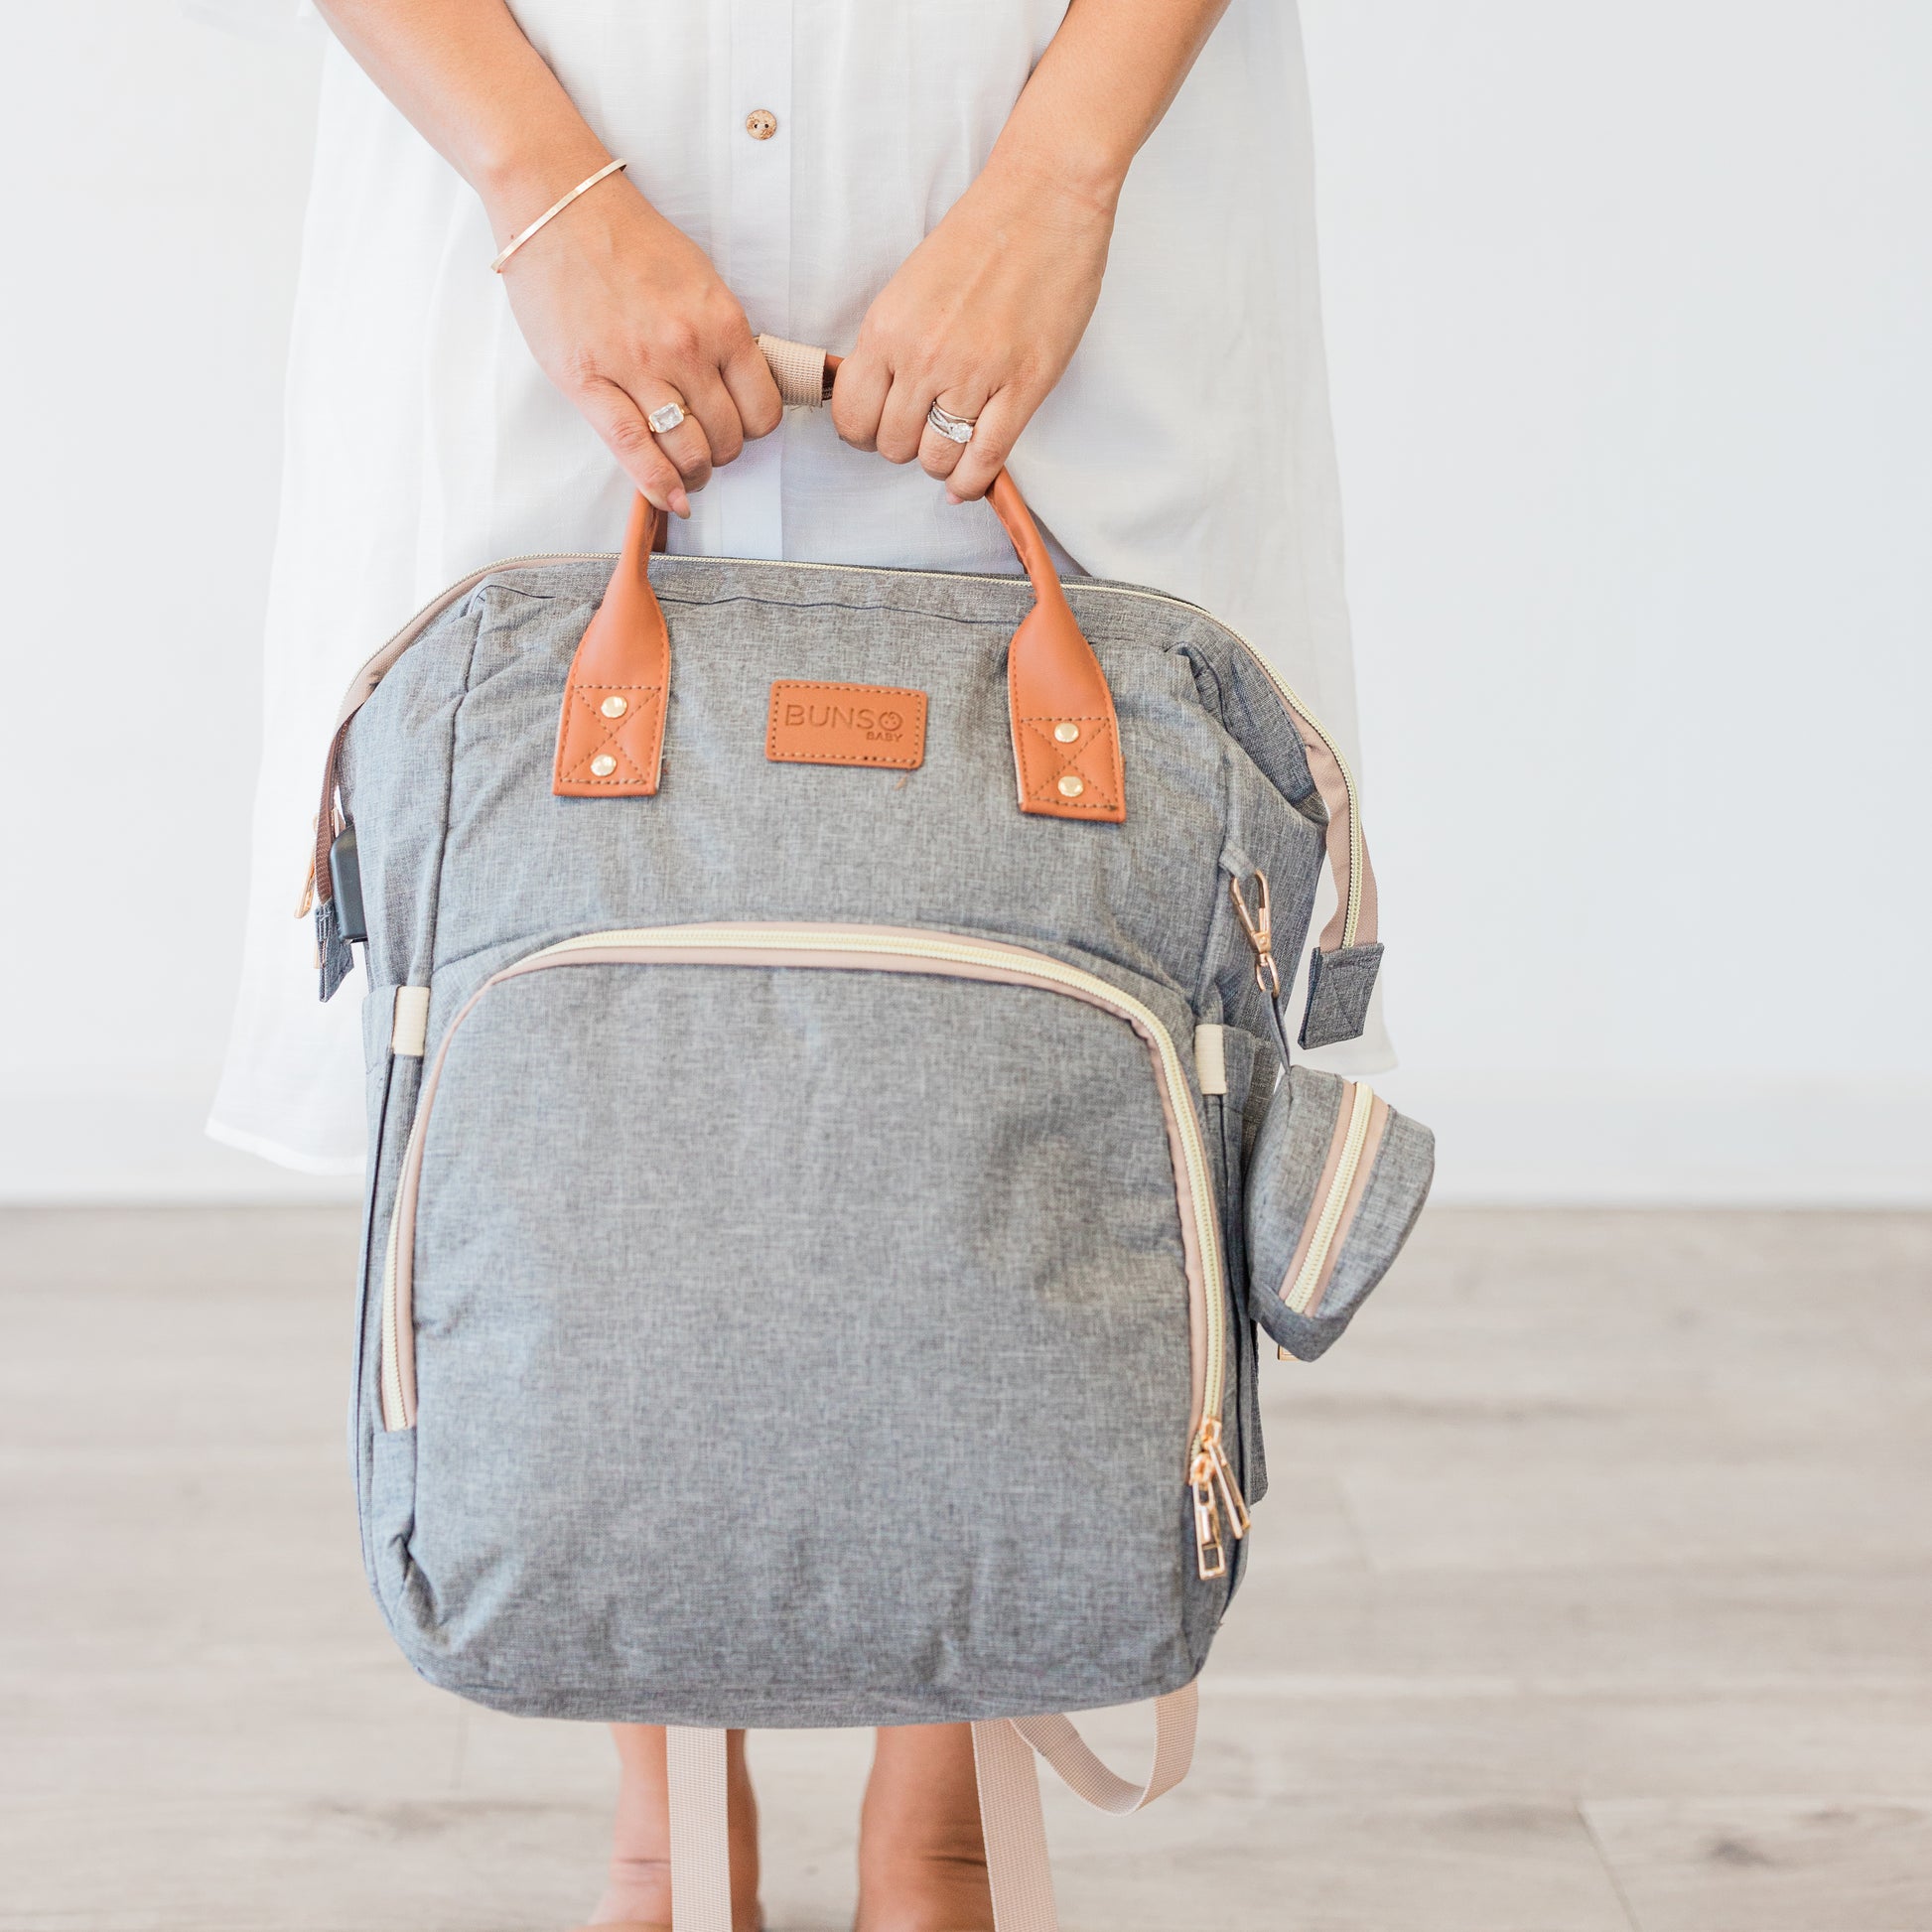 Bb Gear Backpack Diaper Bag with Adjustable Shoulder Strap, Gray